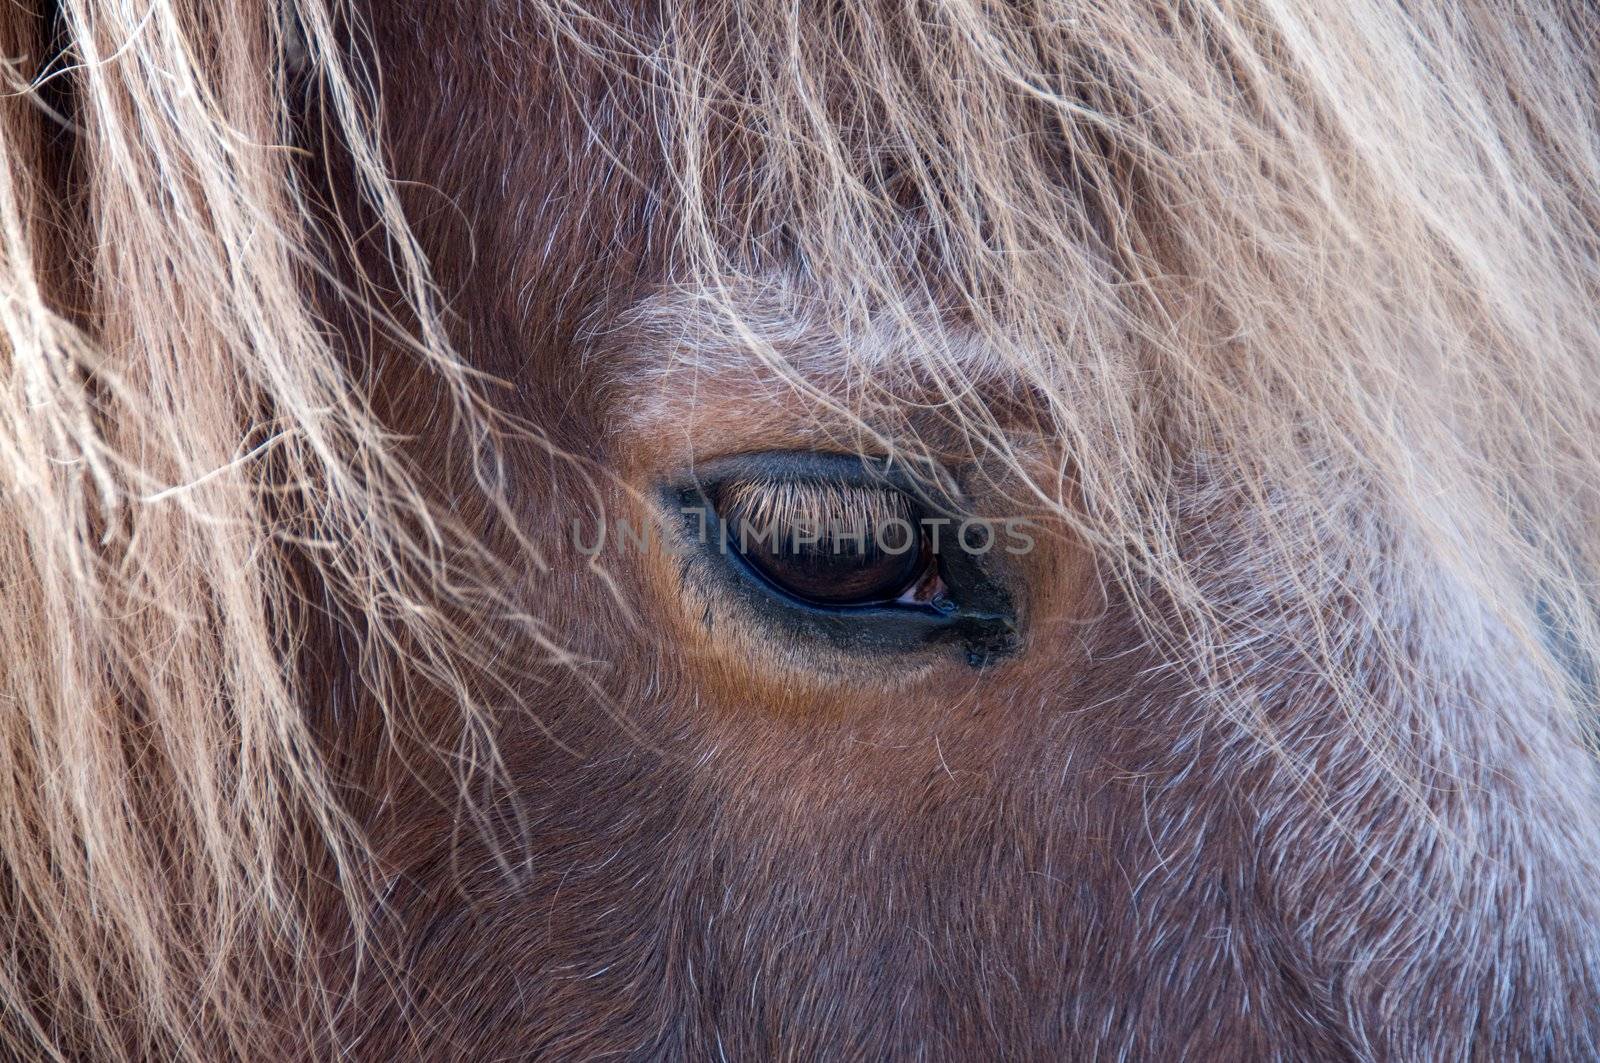 The horse looks sad. Eye of a horse.